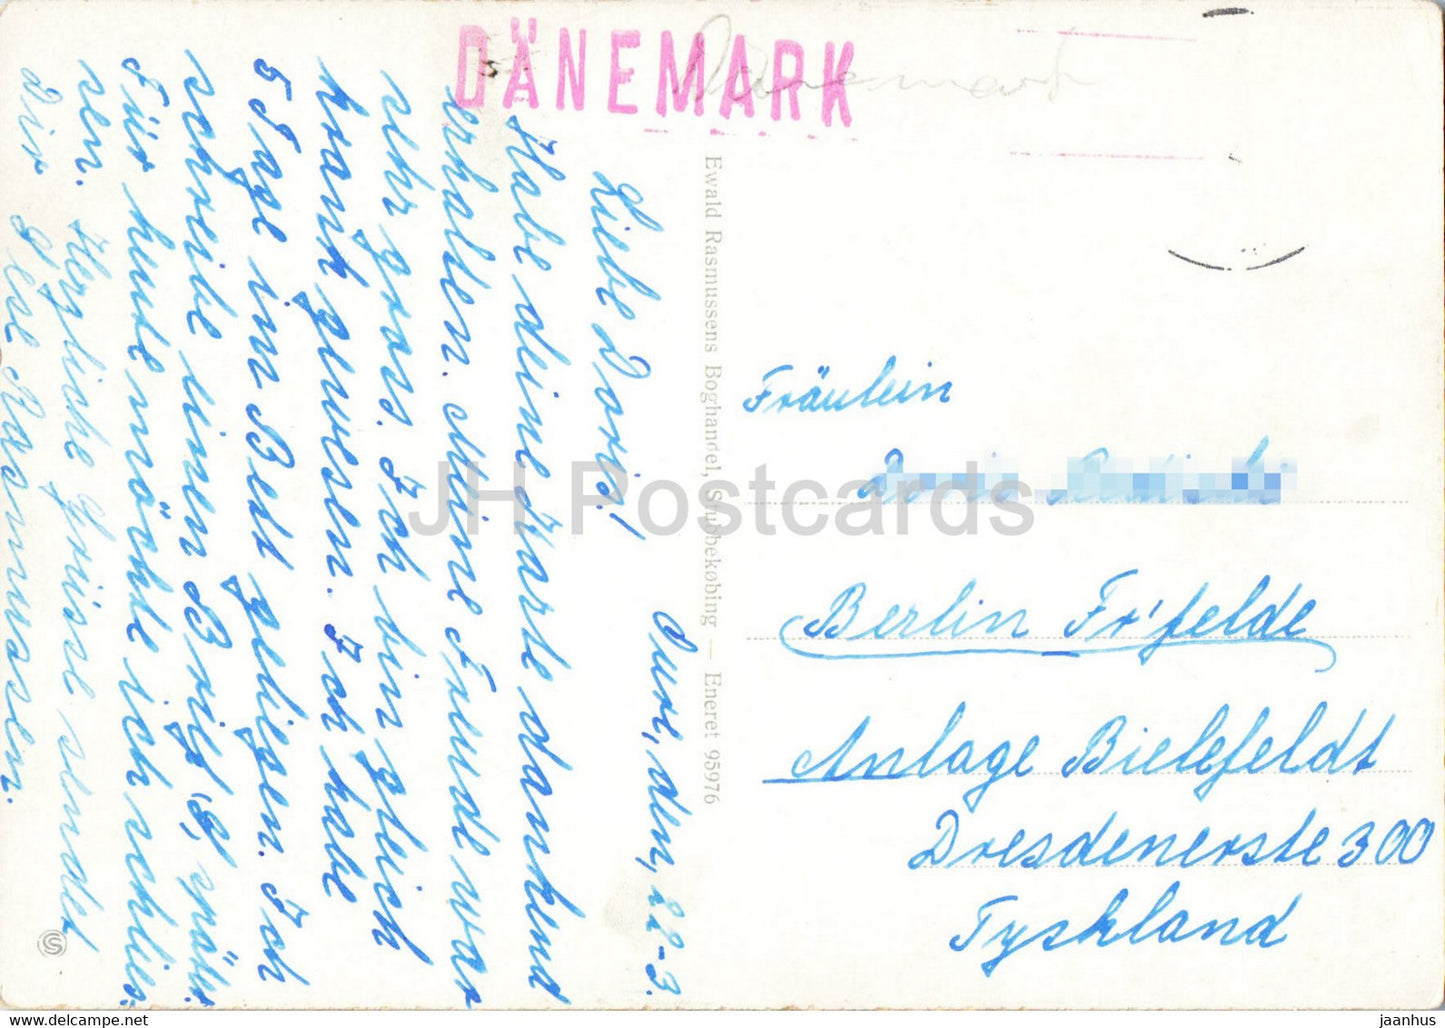 Bogo Havn - voilier - navire - ferry Gudrun - carte postale ancienne - Danemark - utilisé